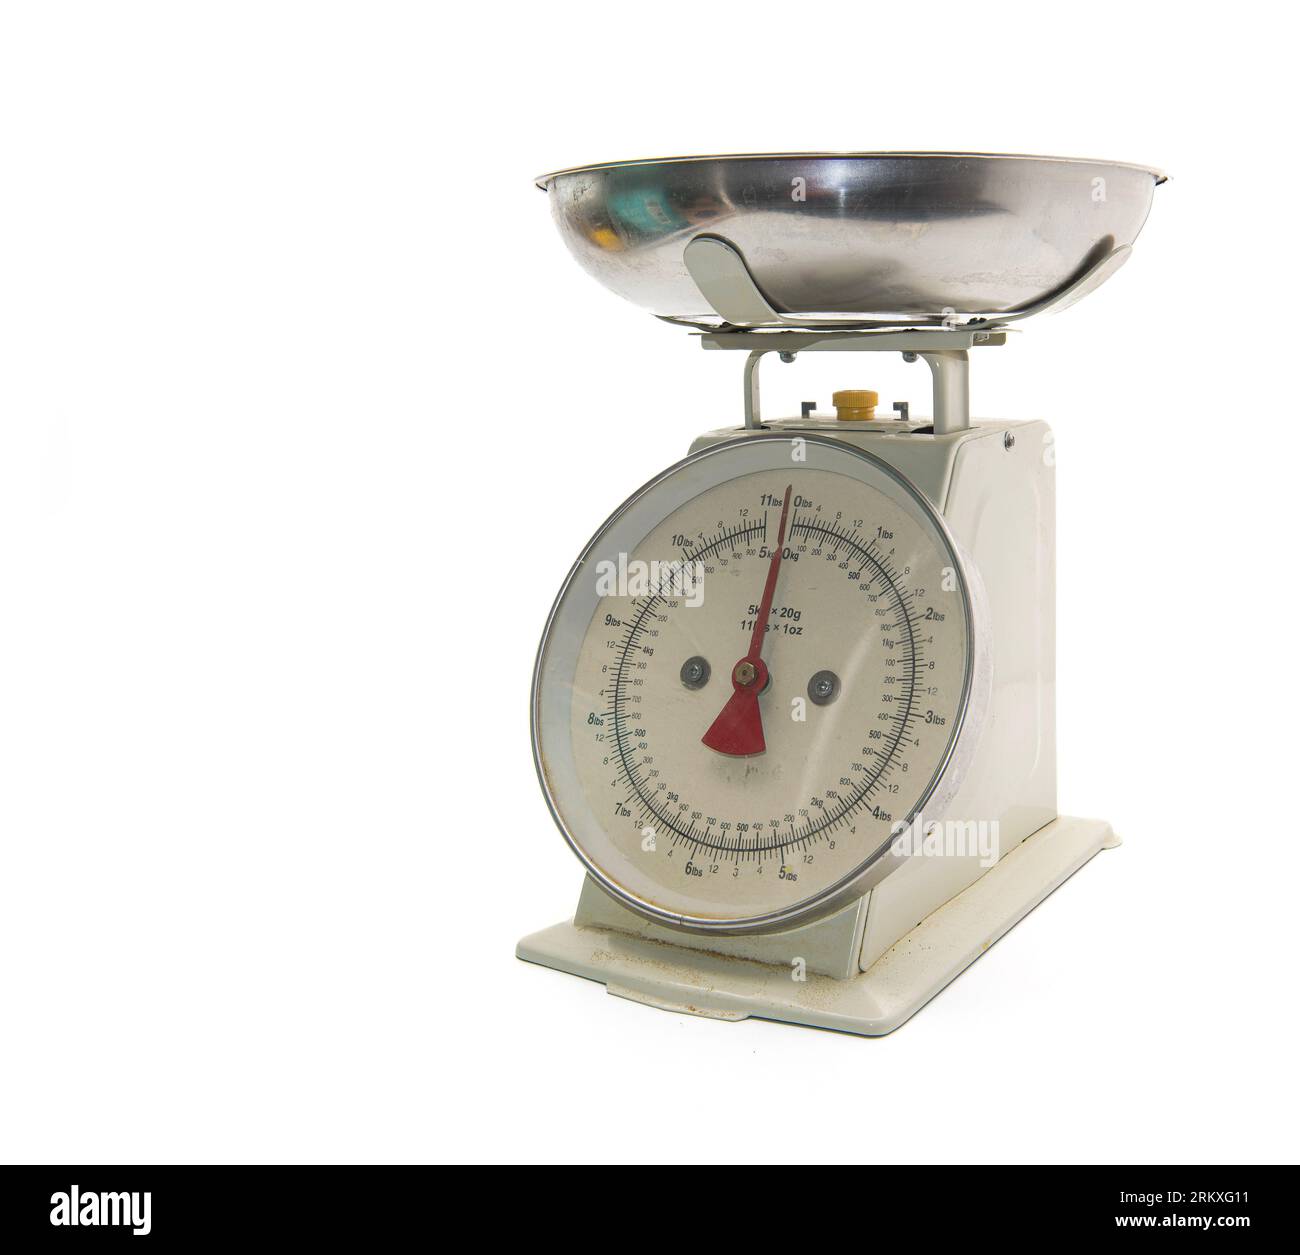 Retro kitchen scales isolated on a white background. Stock Photo